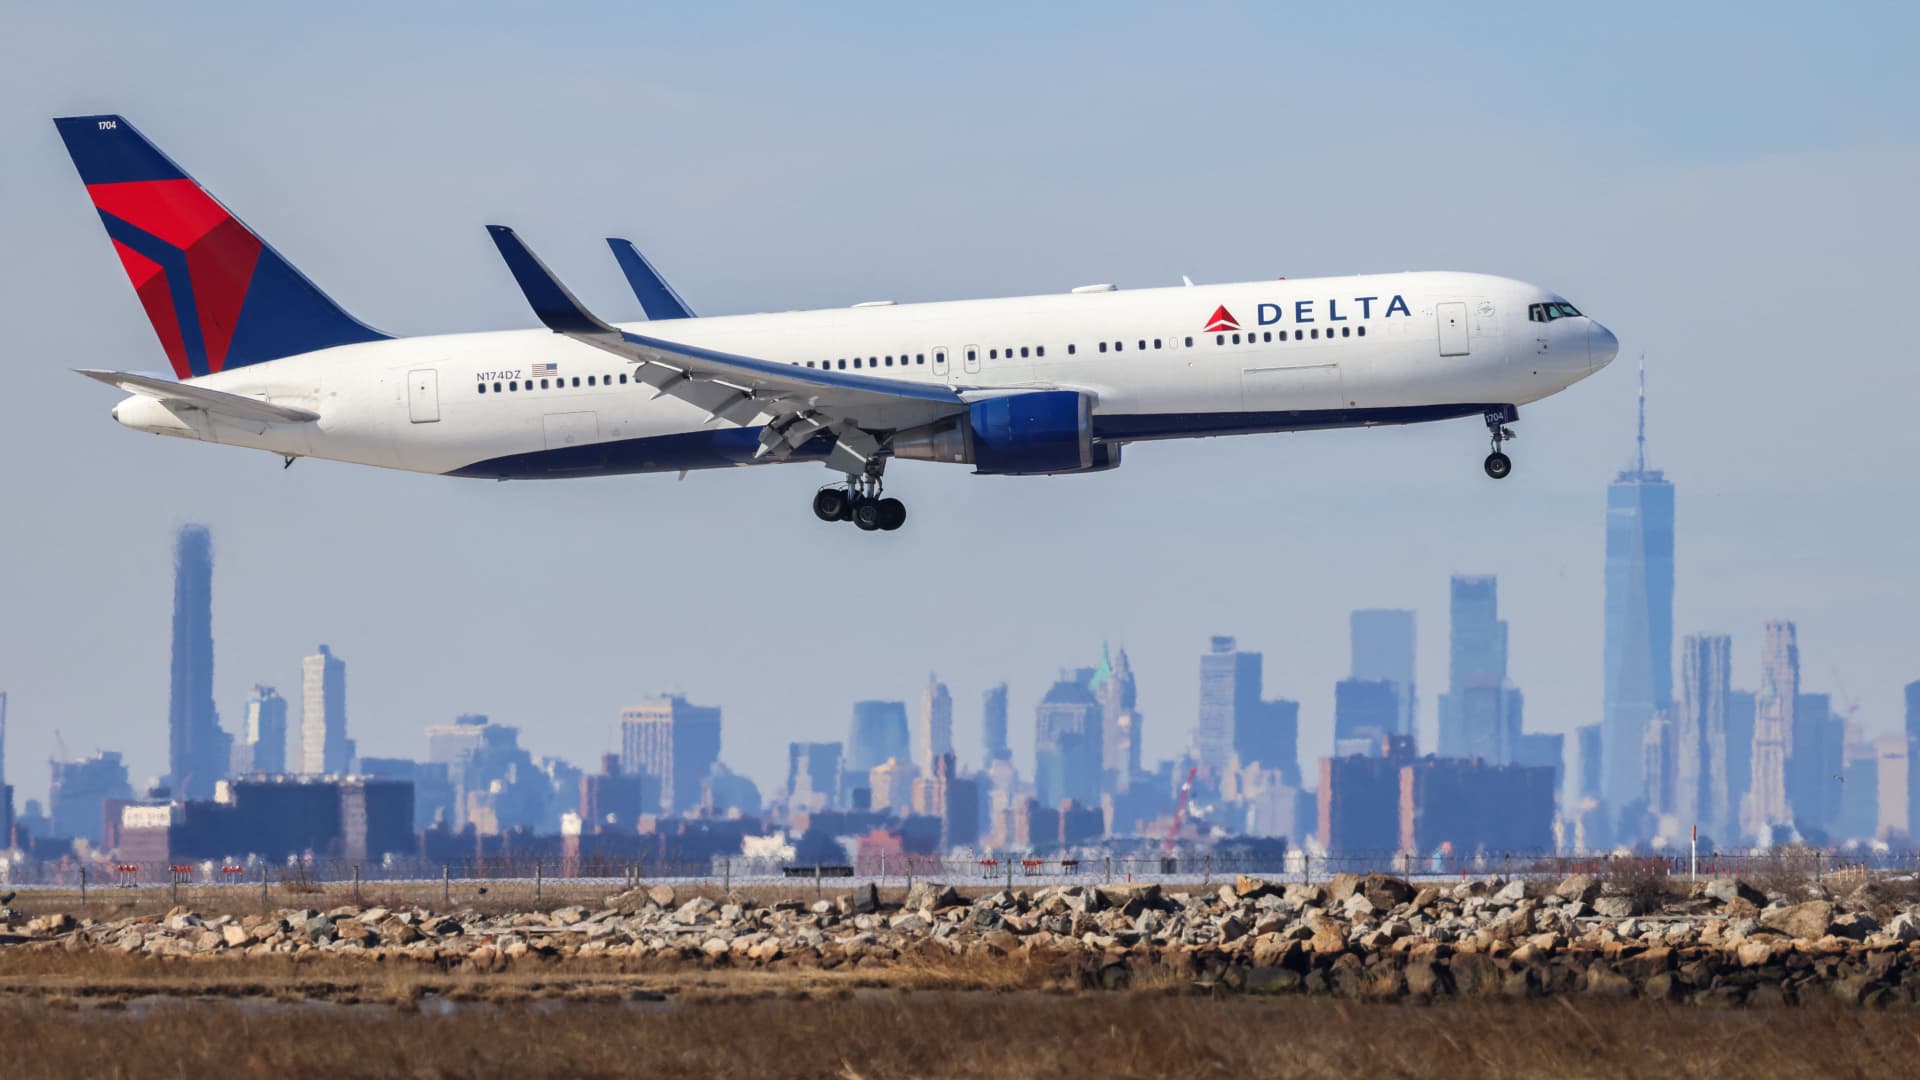 Delta premium economy service is coming to flights between NYC and LA